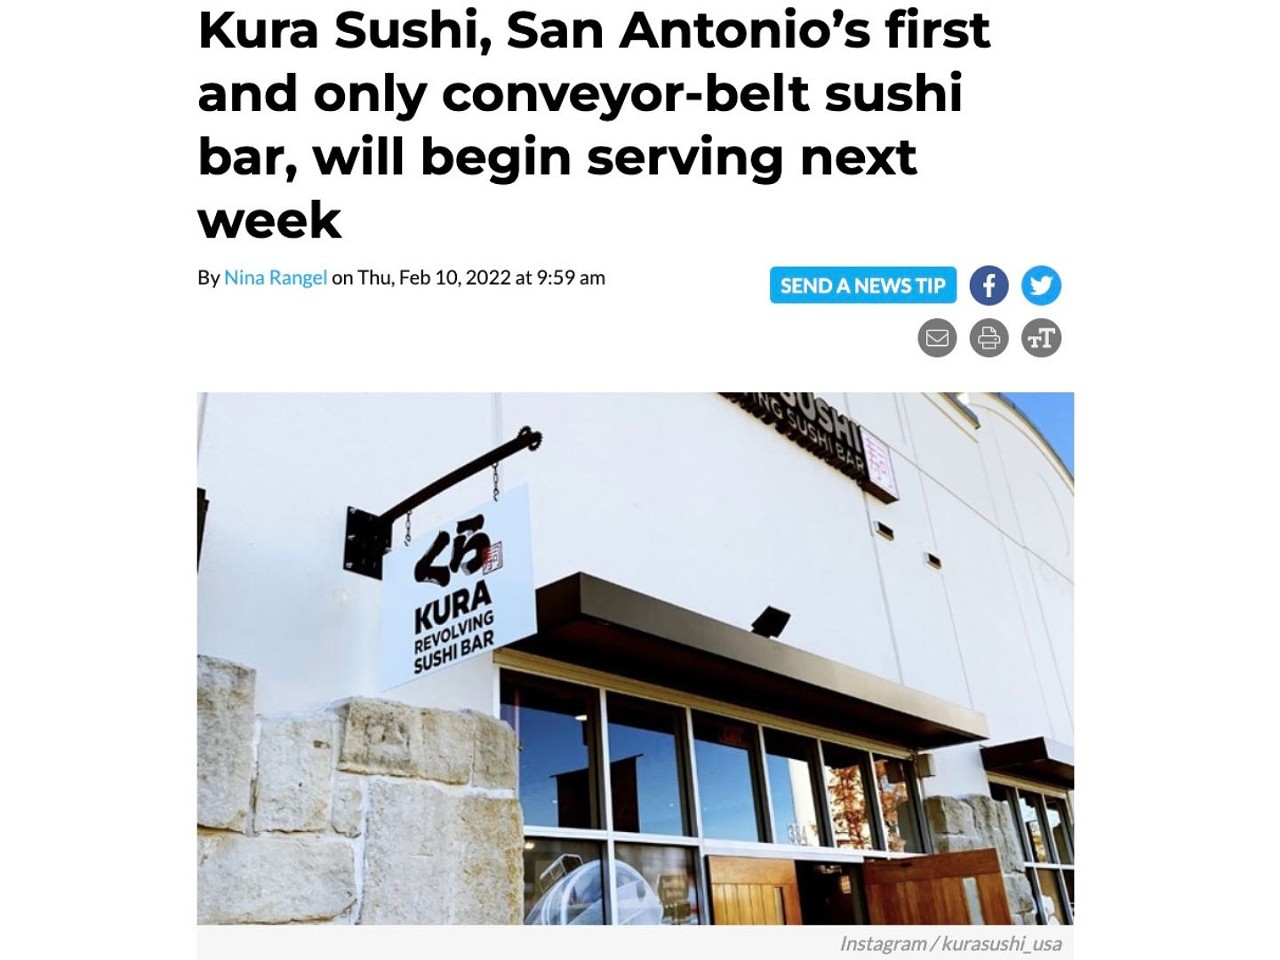 19. Kura Sushi, San Antonio’s first and only conveyor-belt sushi bar, will begin serving next week